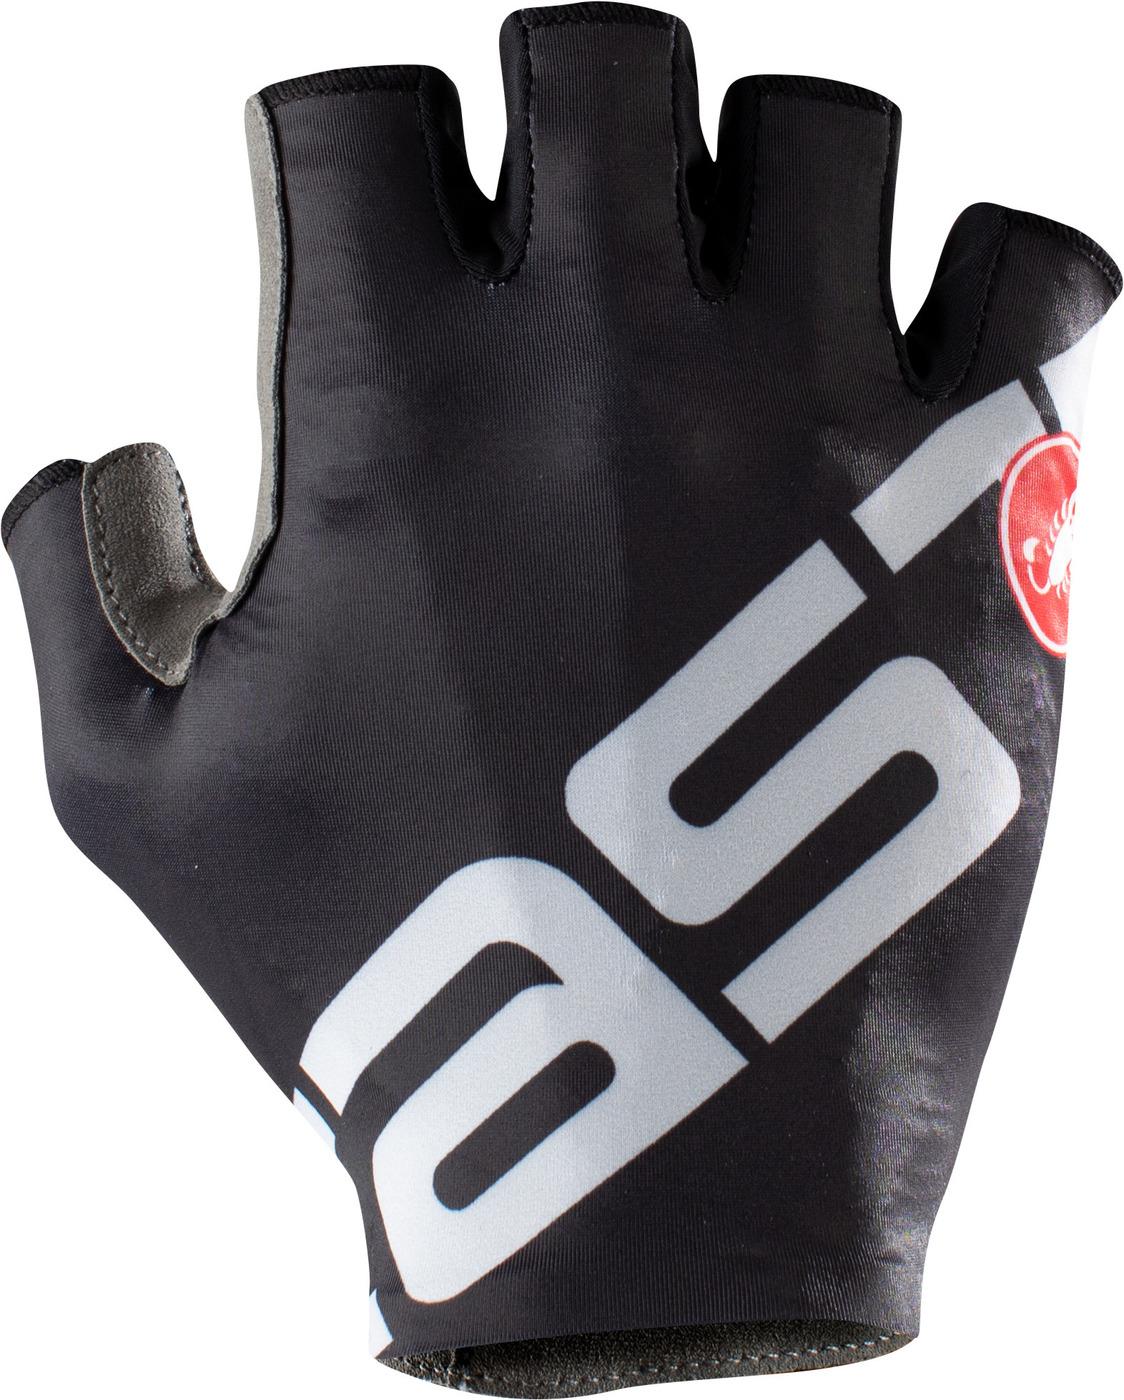 Castelli Competizione 2 Cycling Gloves - Light Black/silver